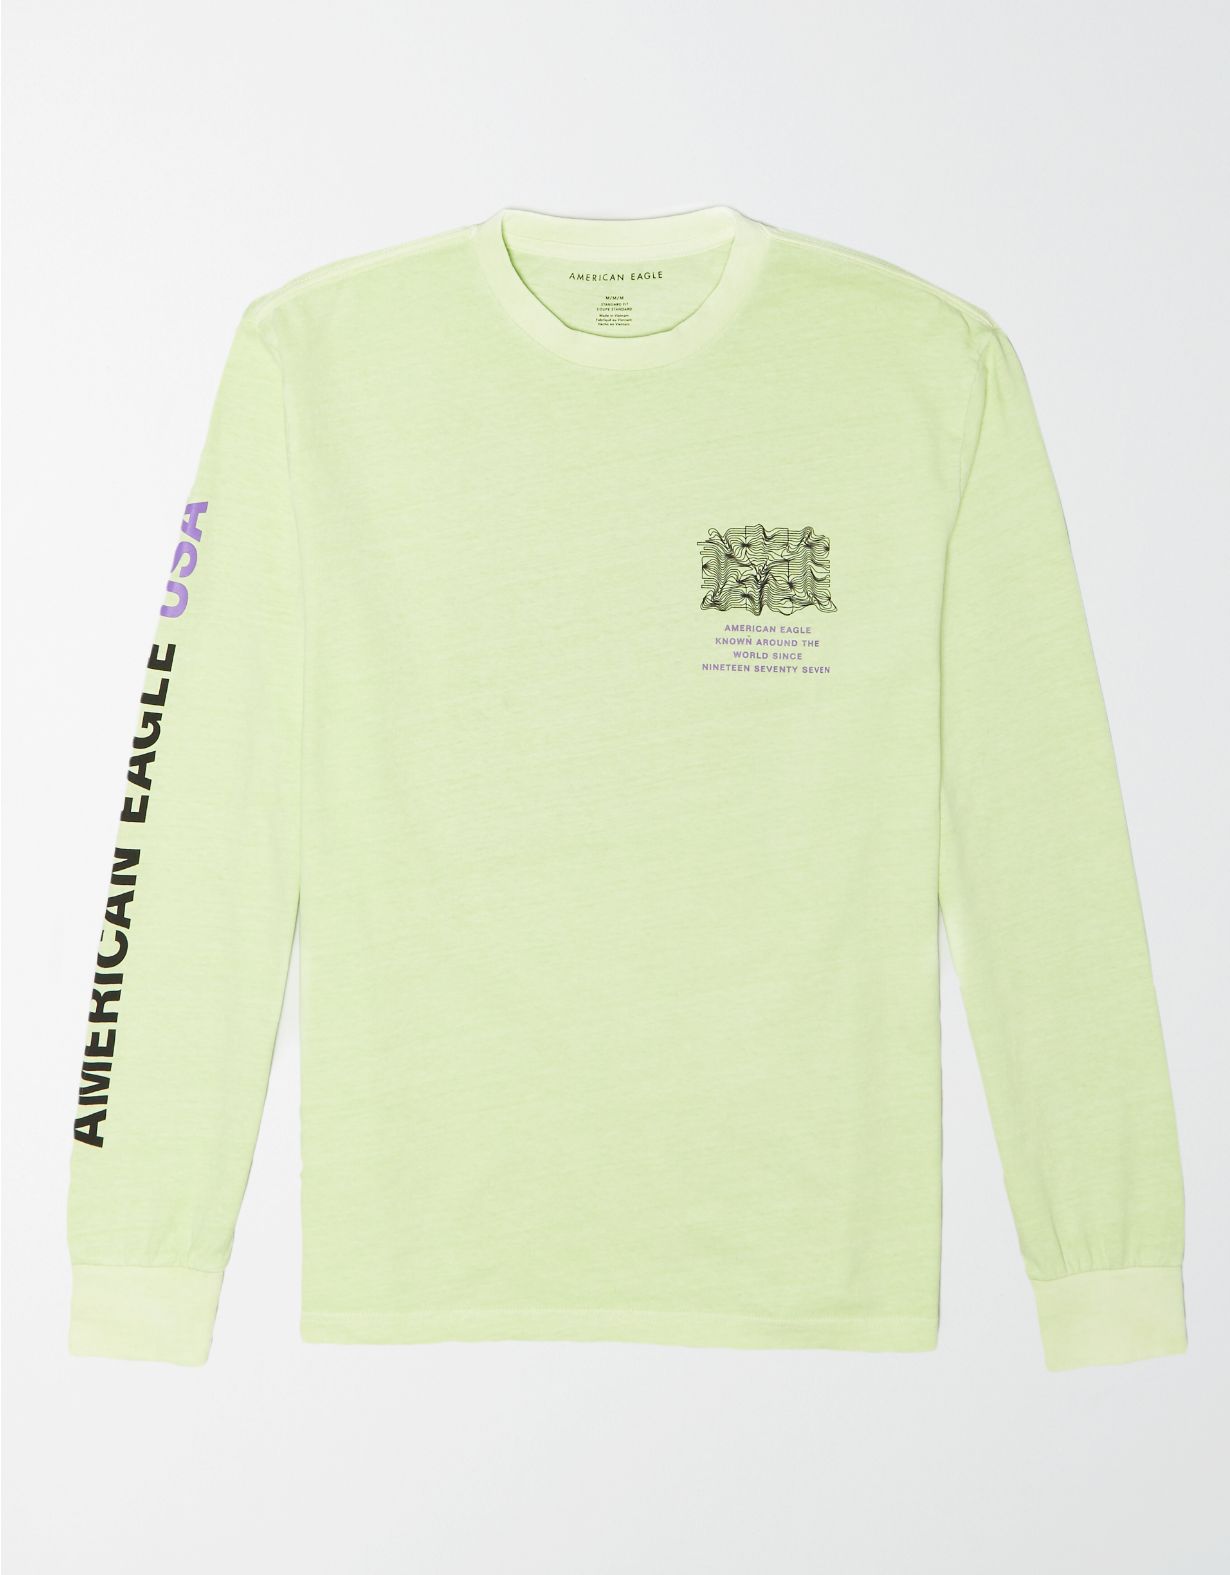 AE Vintage Wash Long-Sleeve Graphic T-Shirt